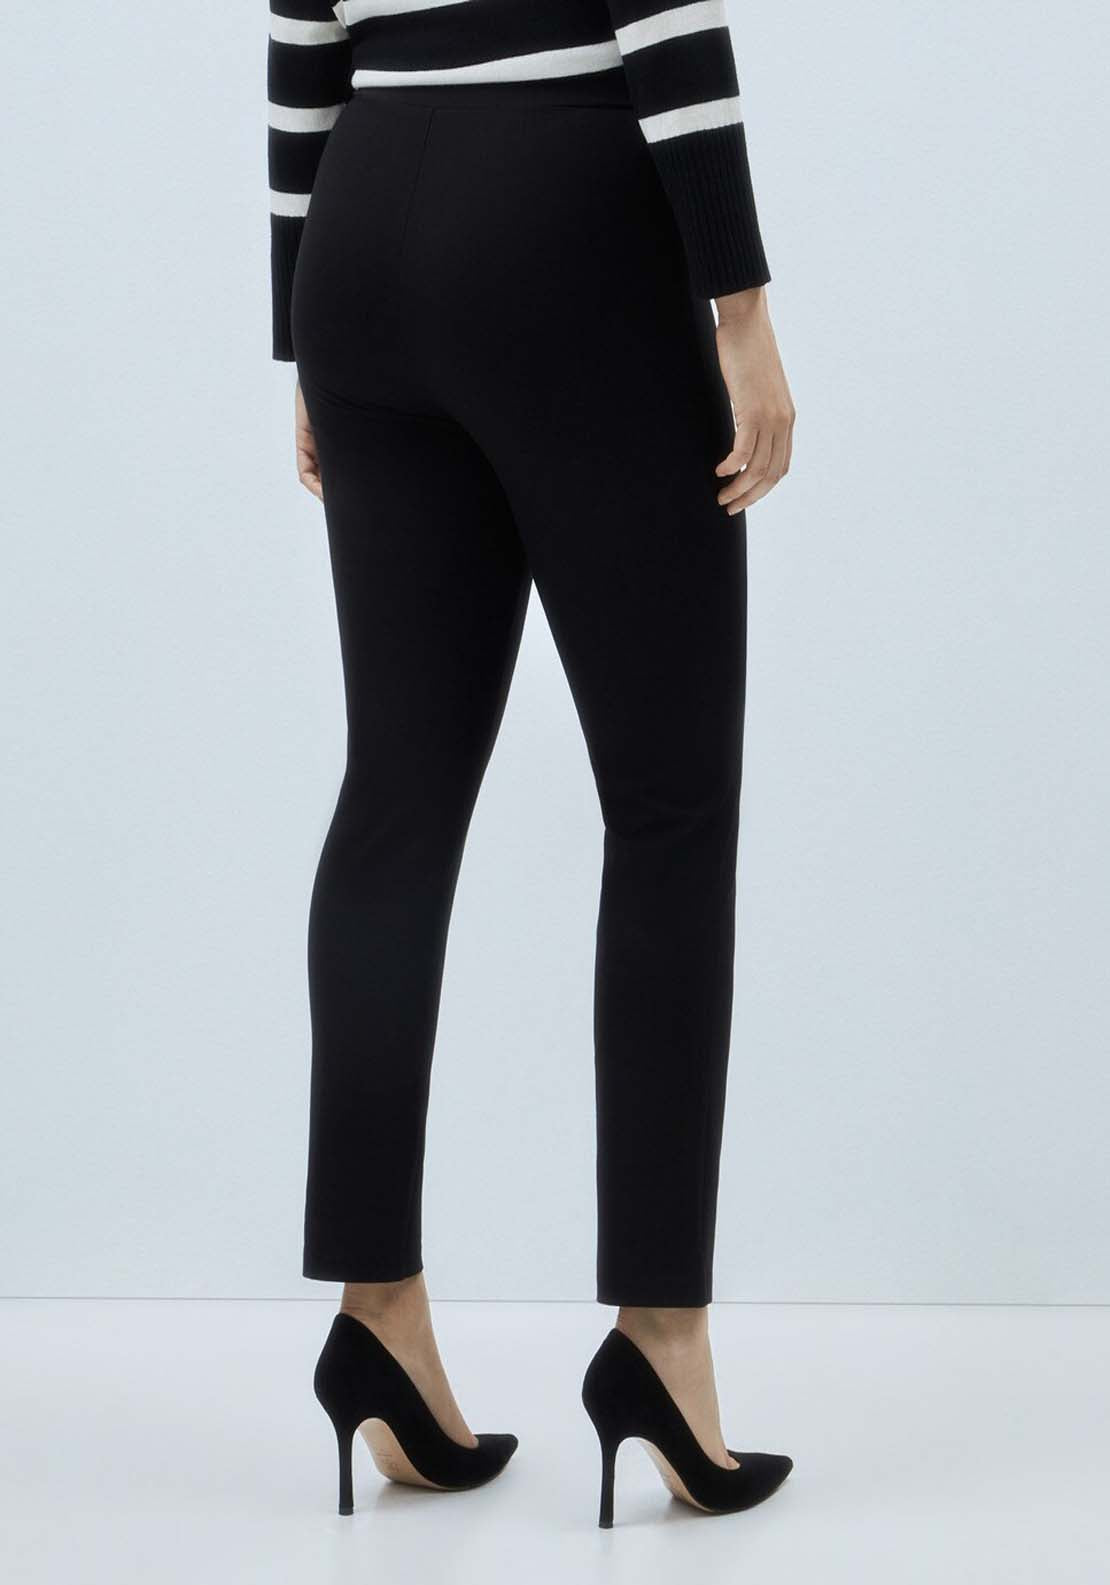 Couchel Knit Leggin Trousers - Black 3 Shaws Department Stores